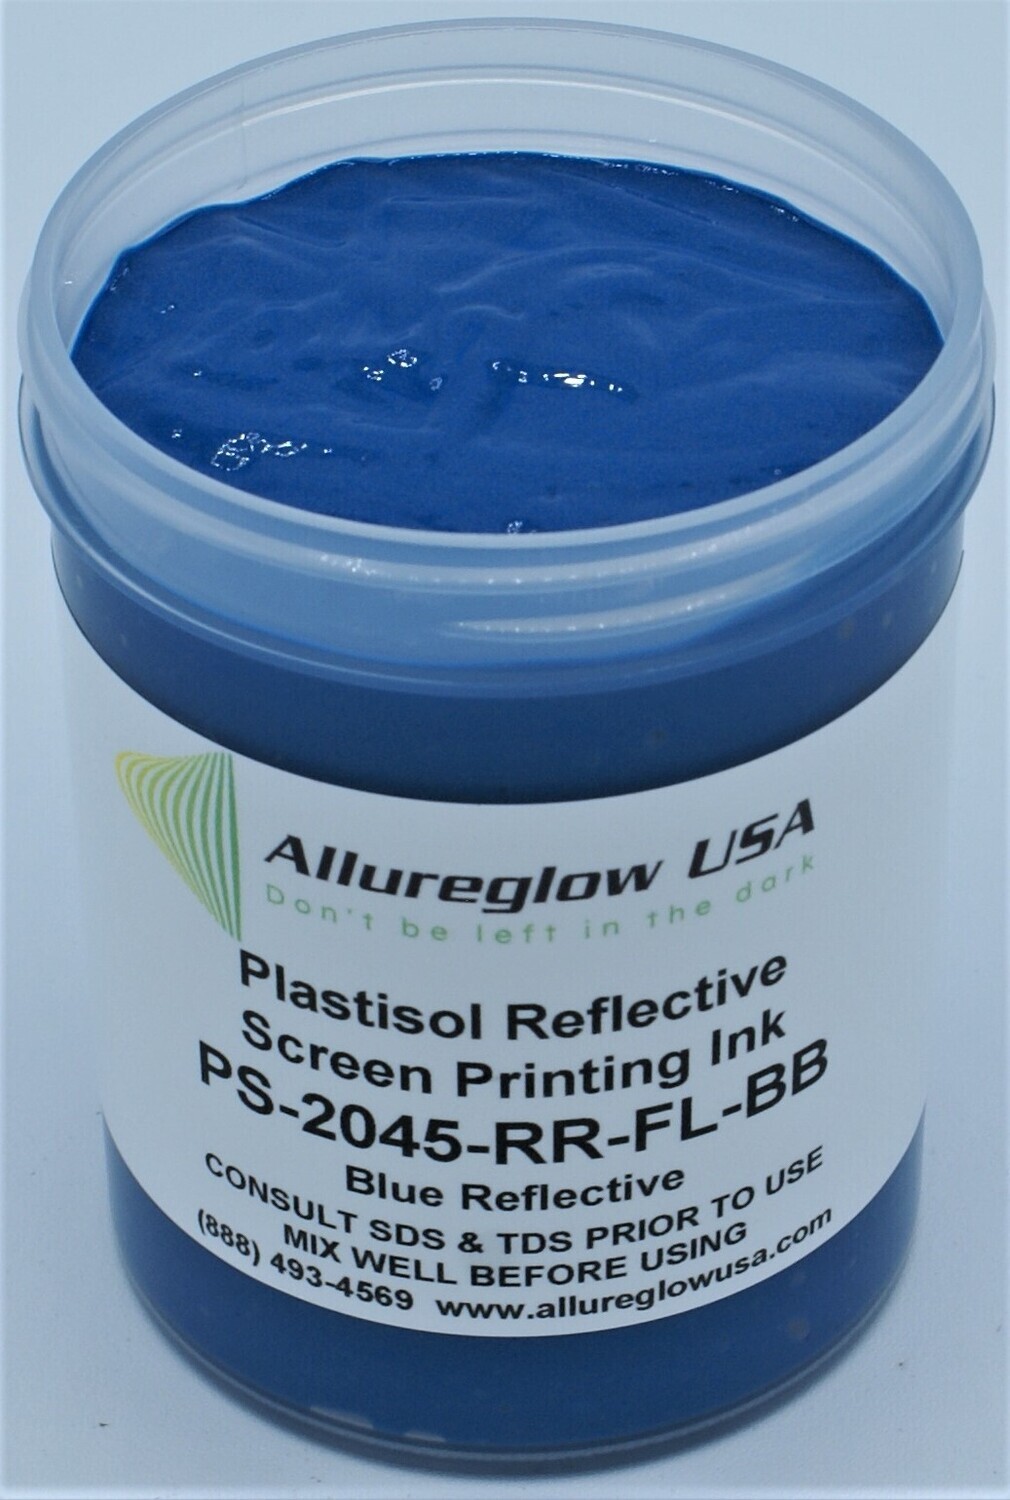 SB-2045-RR-FL-BB-8OZ   SOLVENT BASED BLUE REFLECTIVE SCREEN PRINTING INK -  8OZ